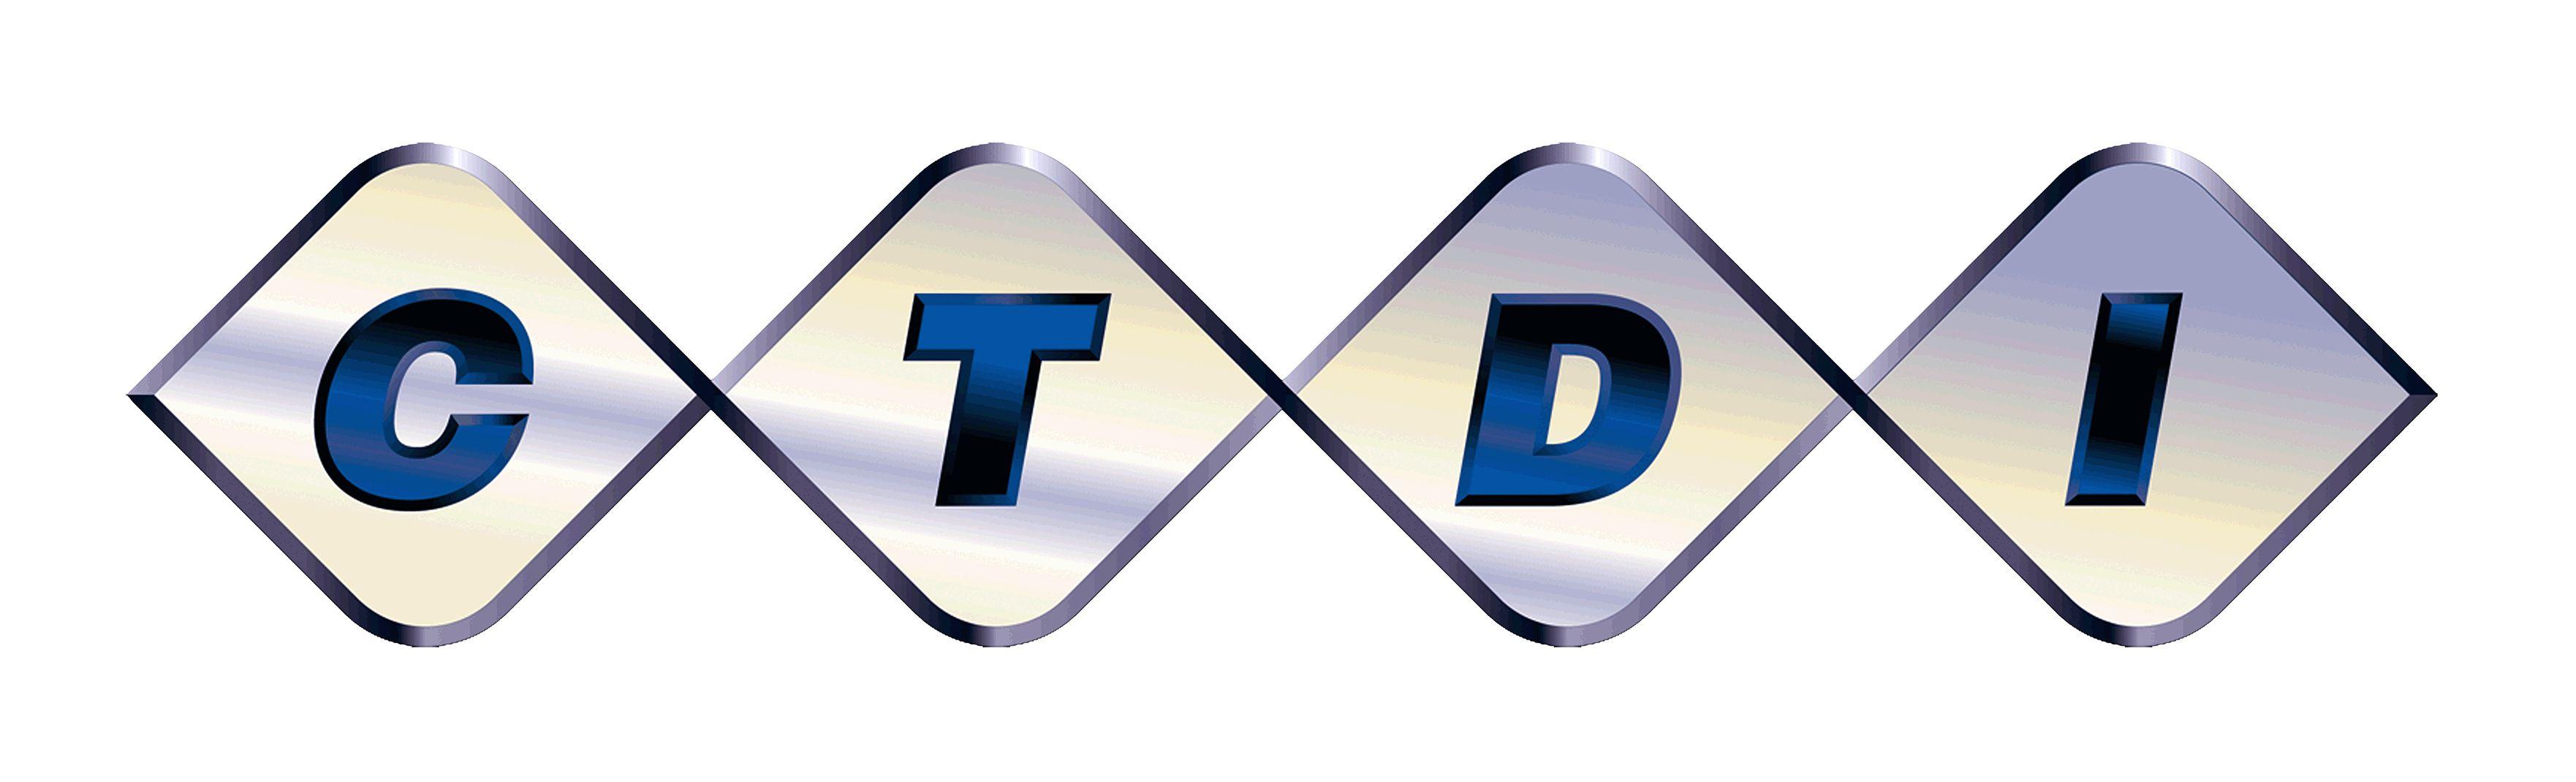 Ctdi Logo - CTDI-Logo-2 - kitting service